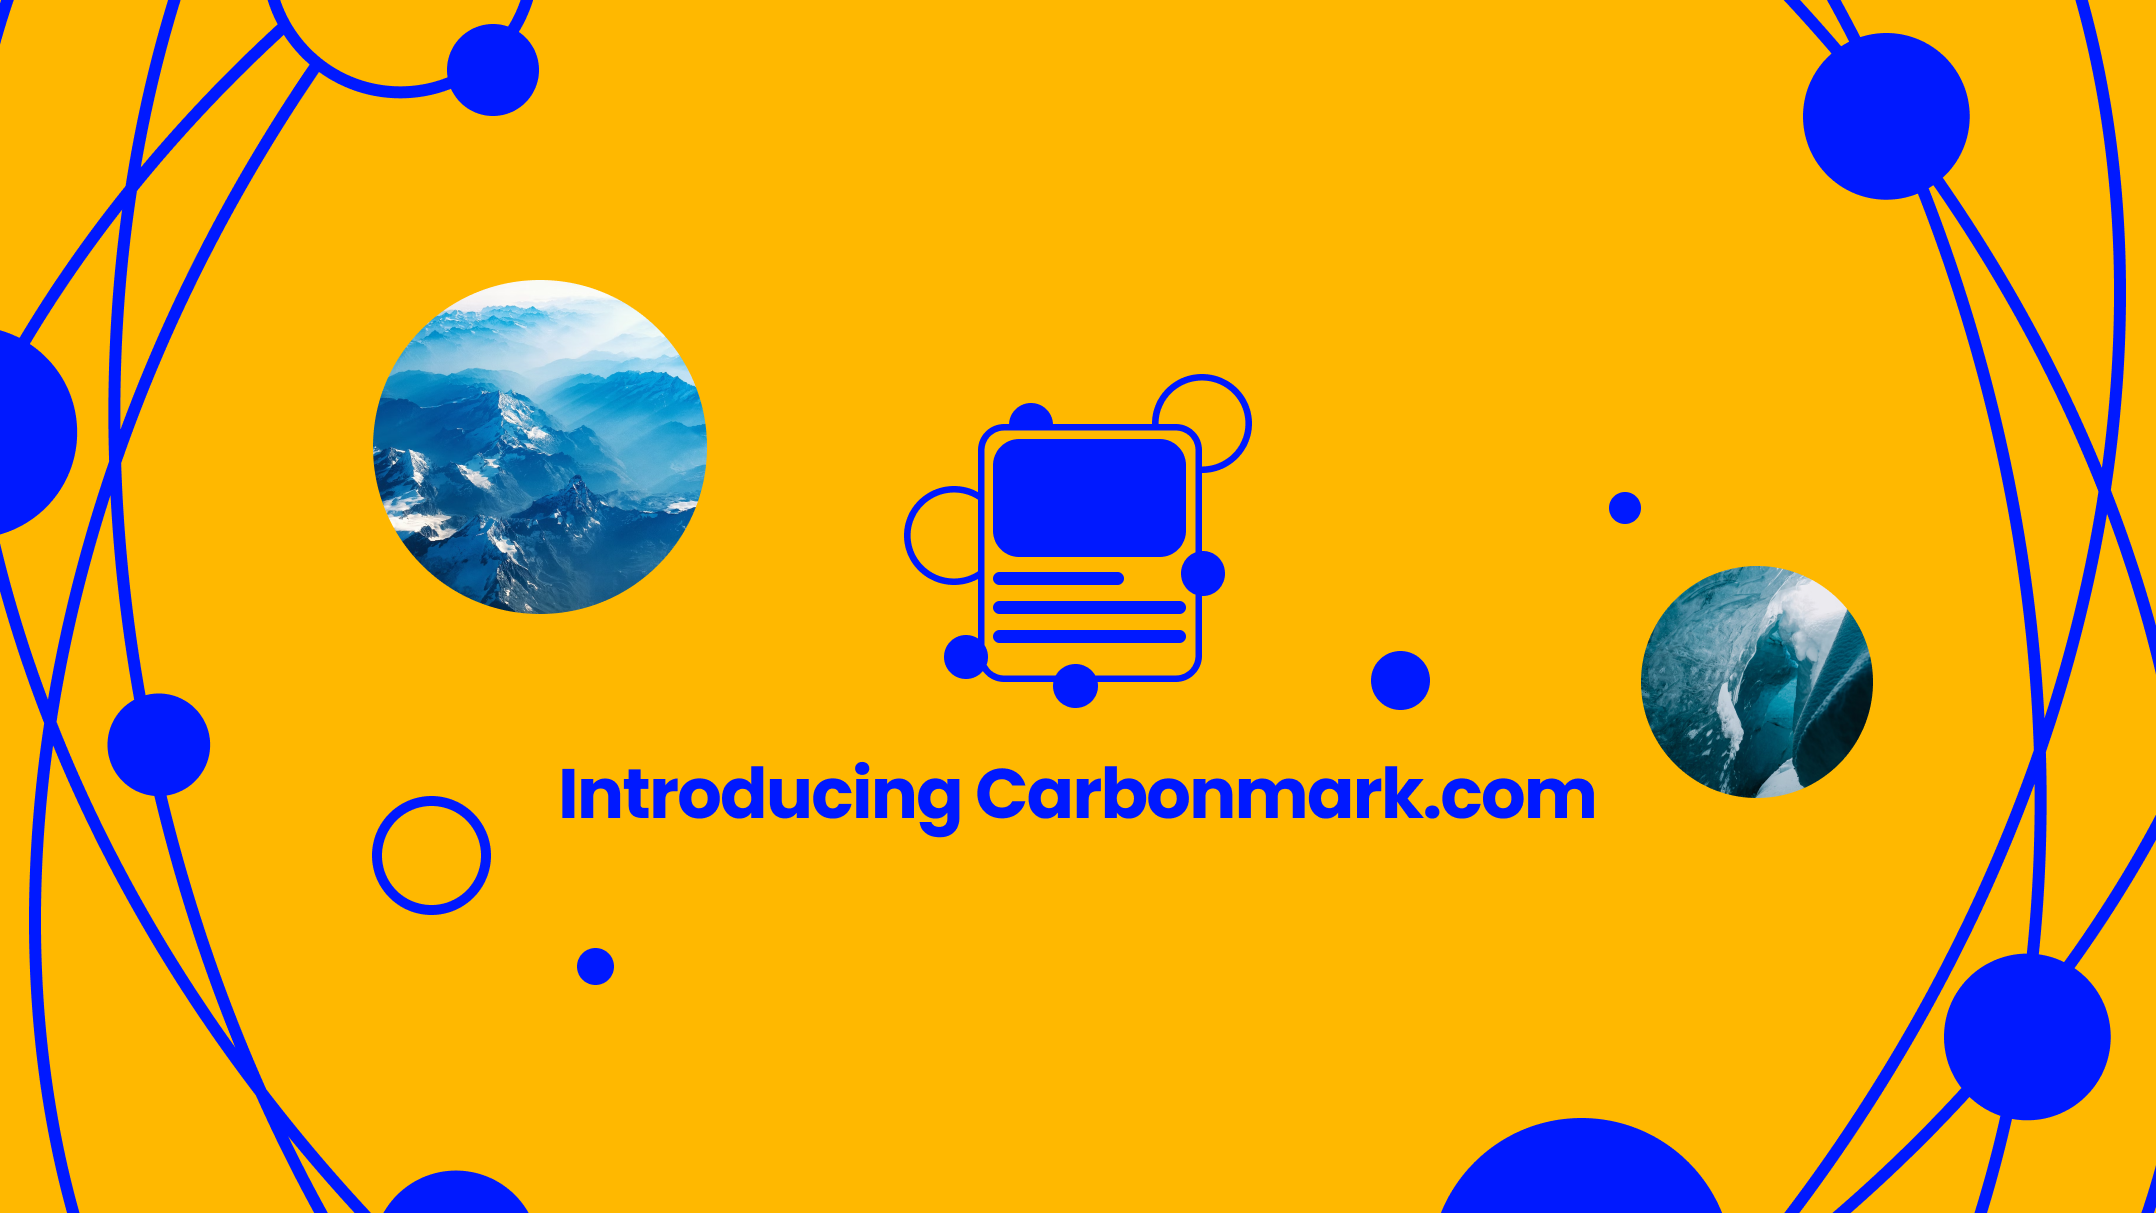 Introducing Carbonmark.com